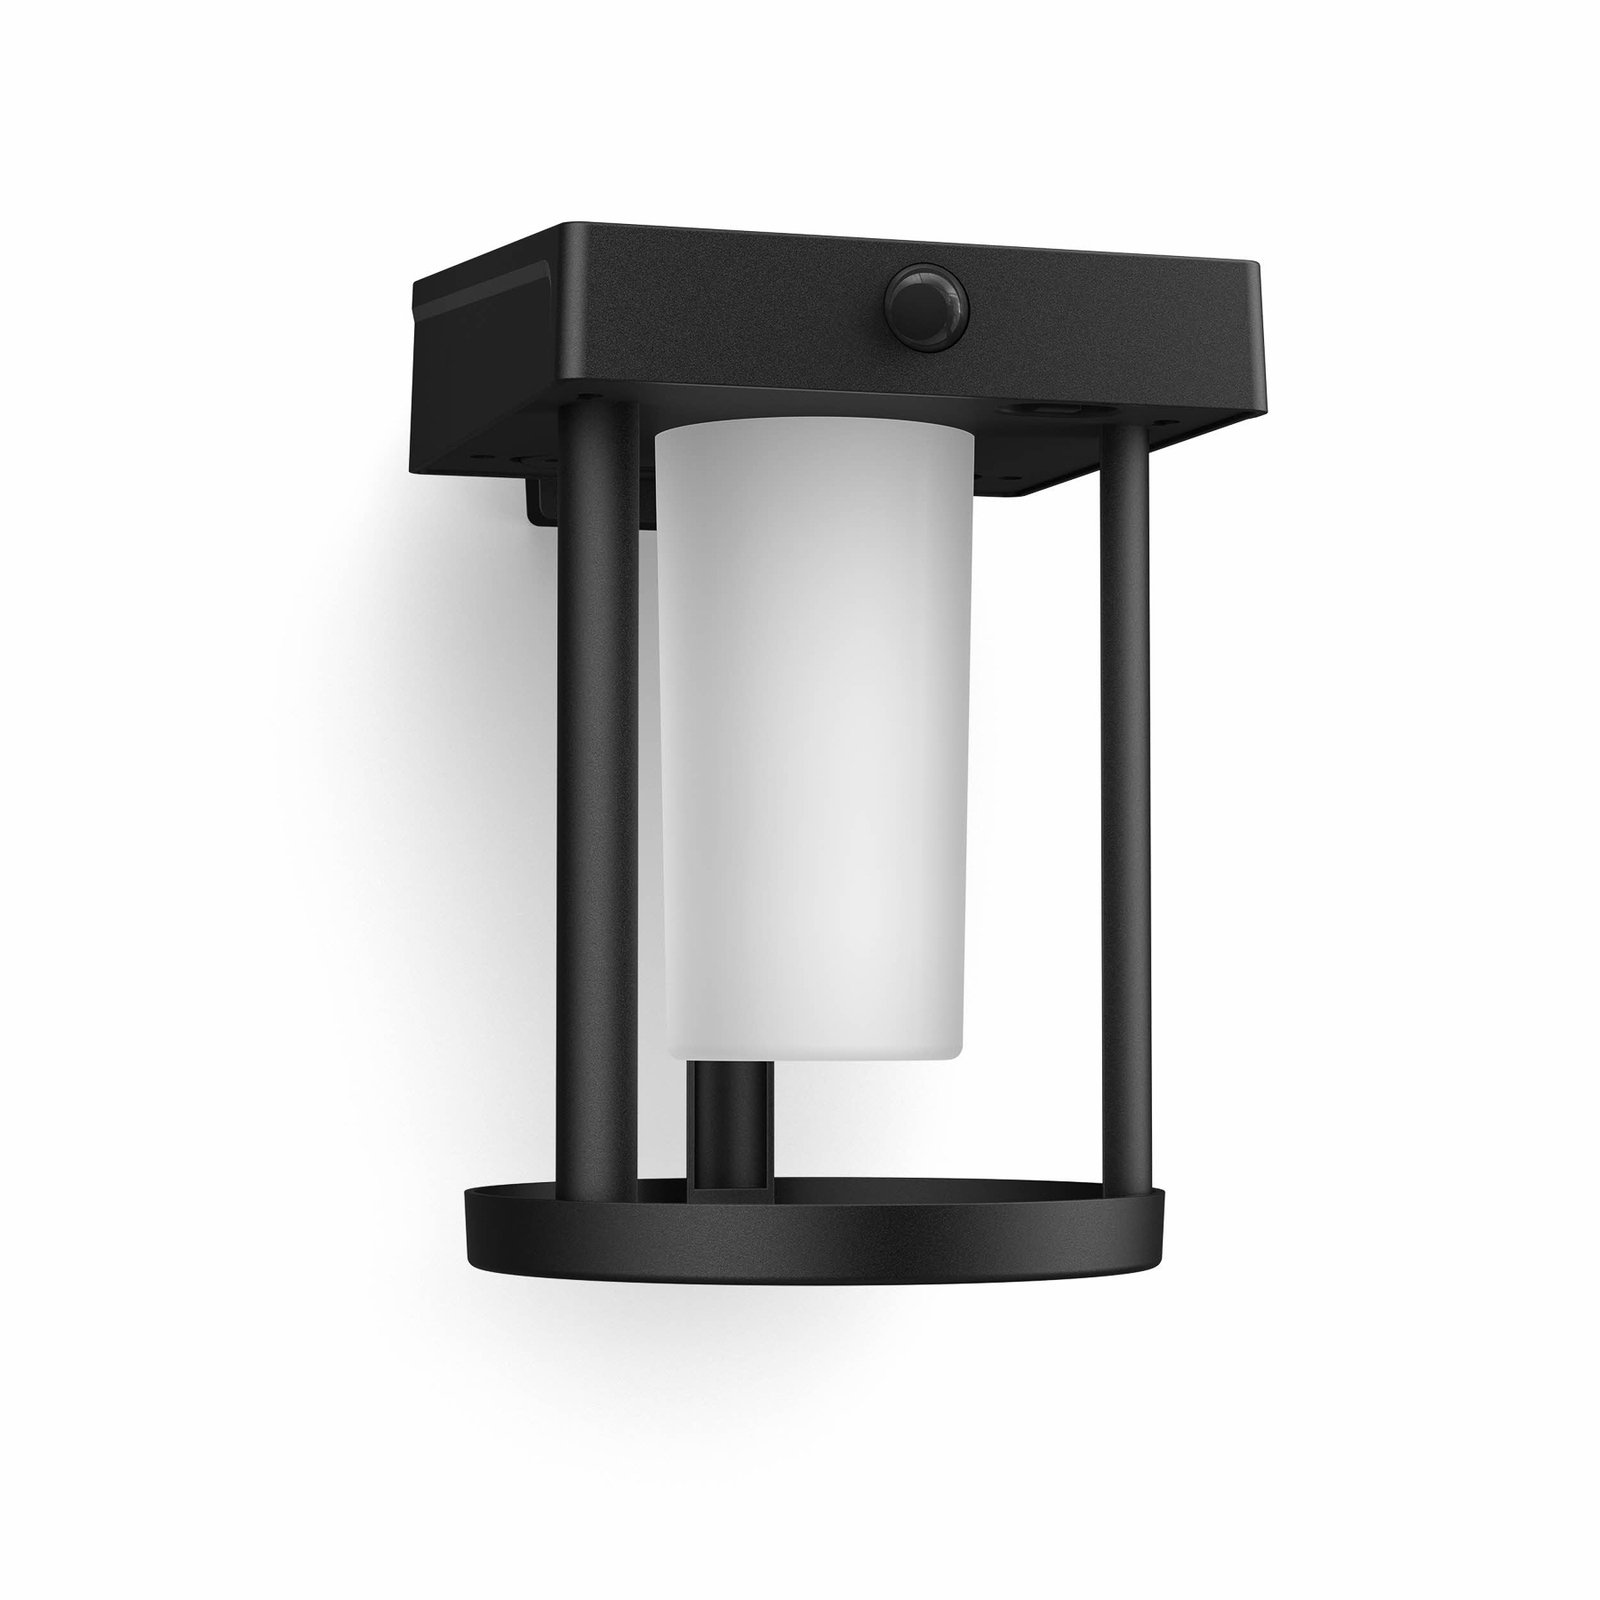 Philips LED napelemes fali lámpa Camill, fekete/fehér, Ø 14 cm